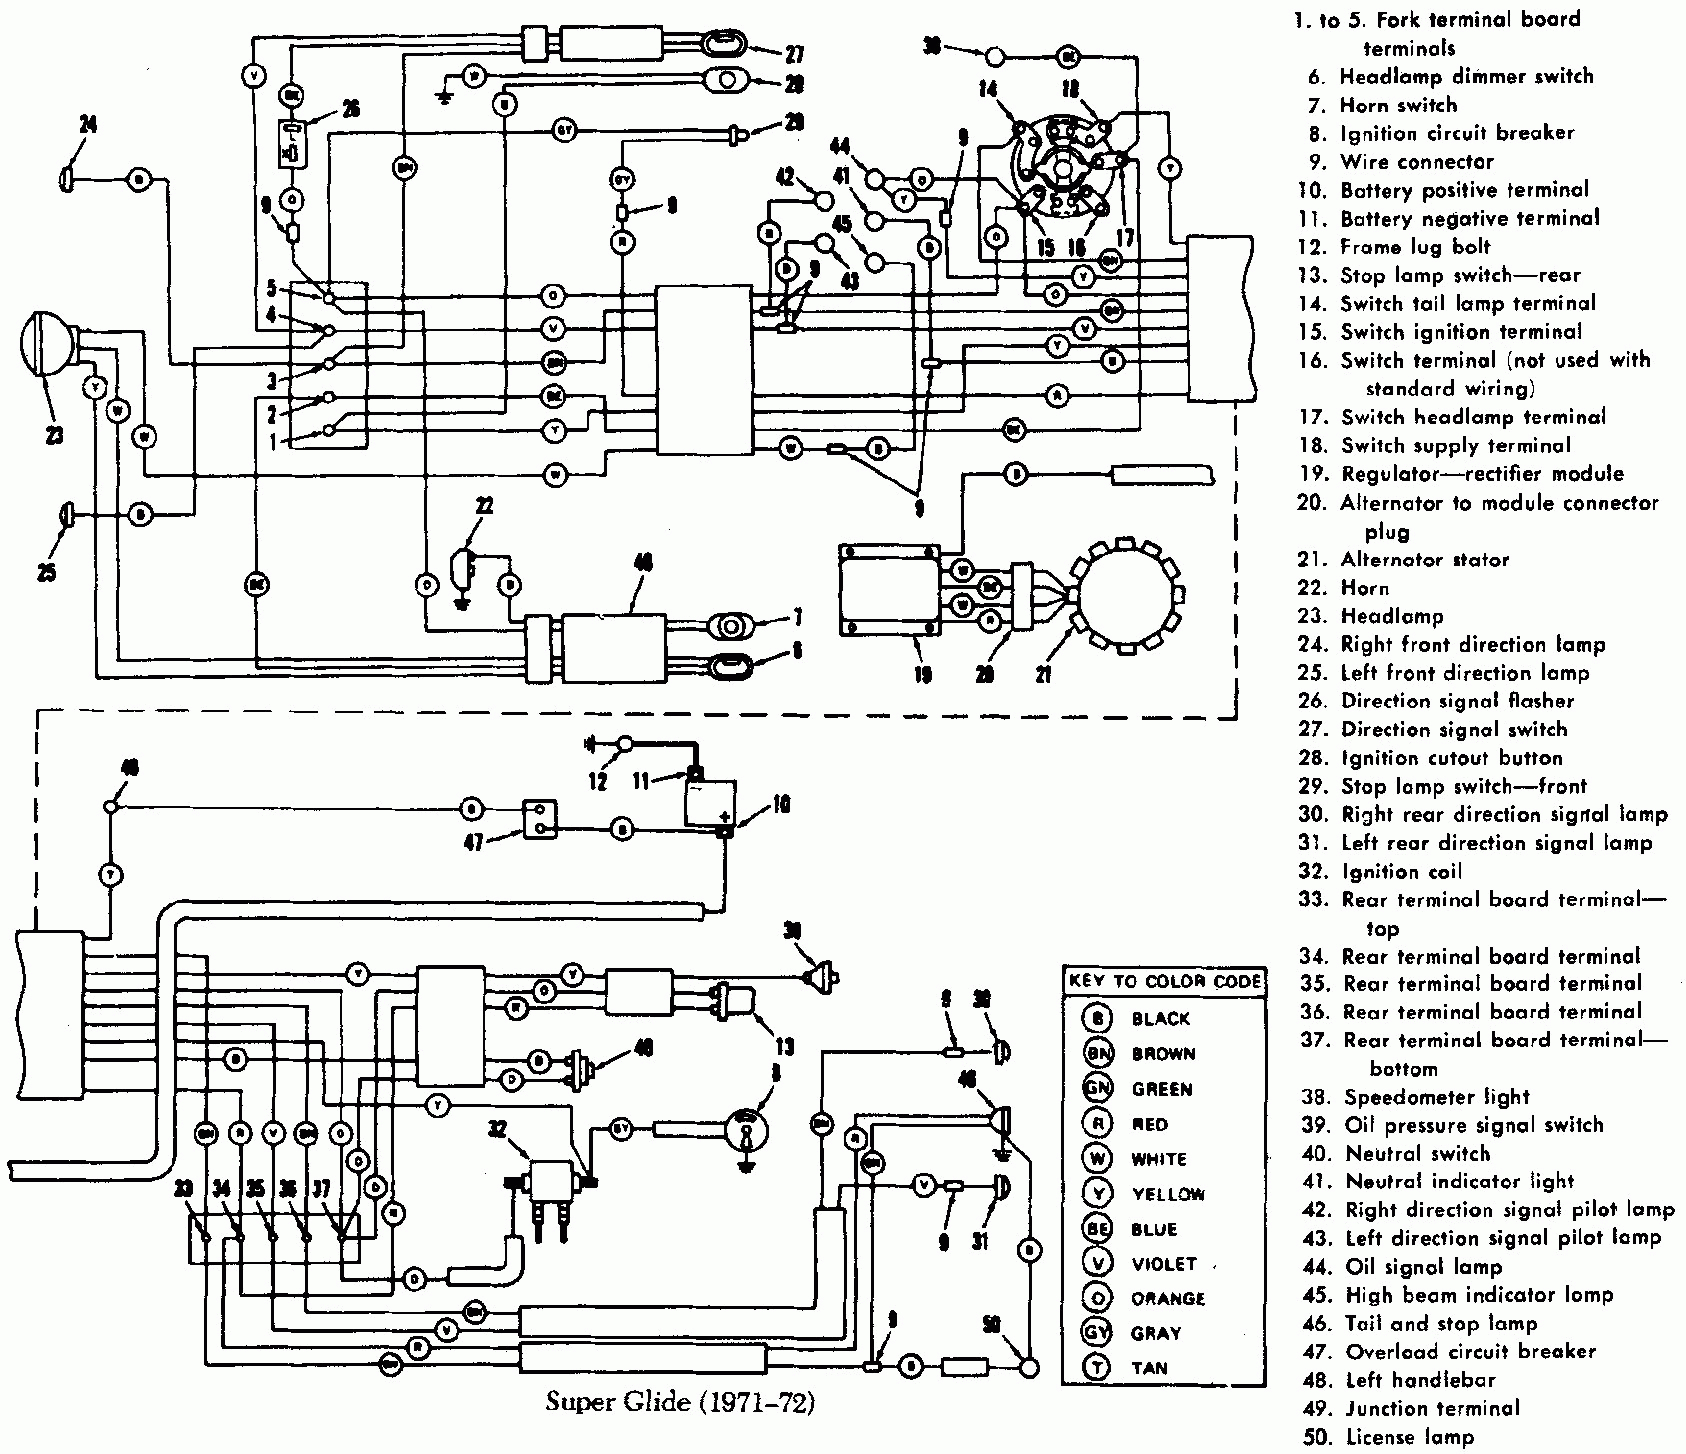 Harley Turn Signal Wiring Diagram 1998 | Wiring Library - Wiring Diagram For Harley Davidson Softail